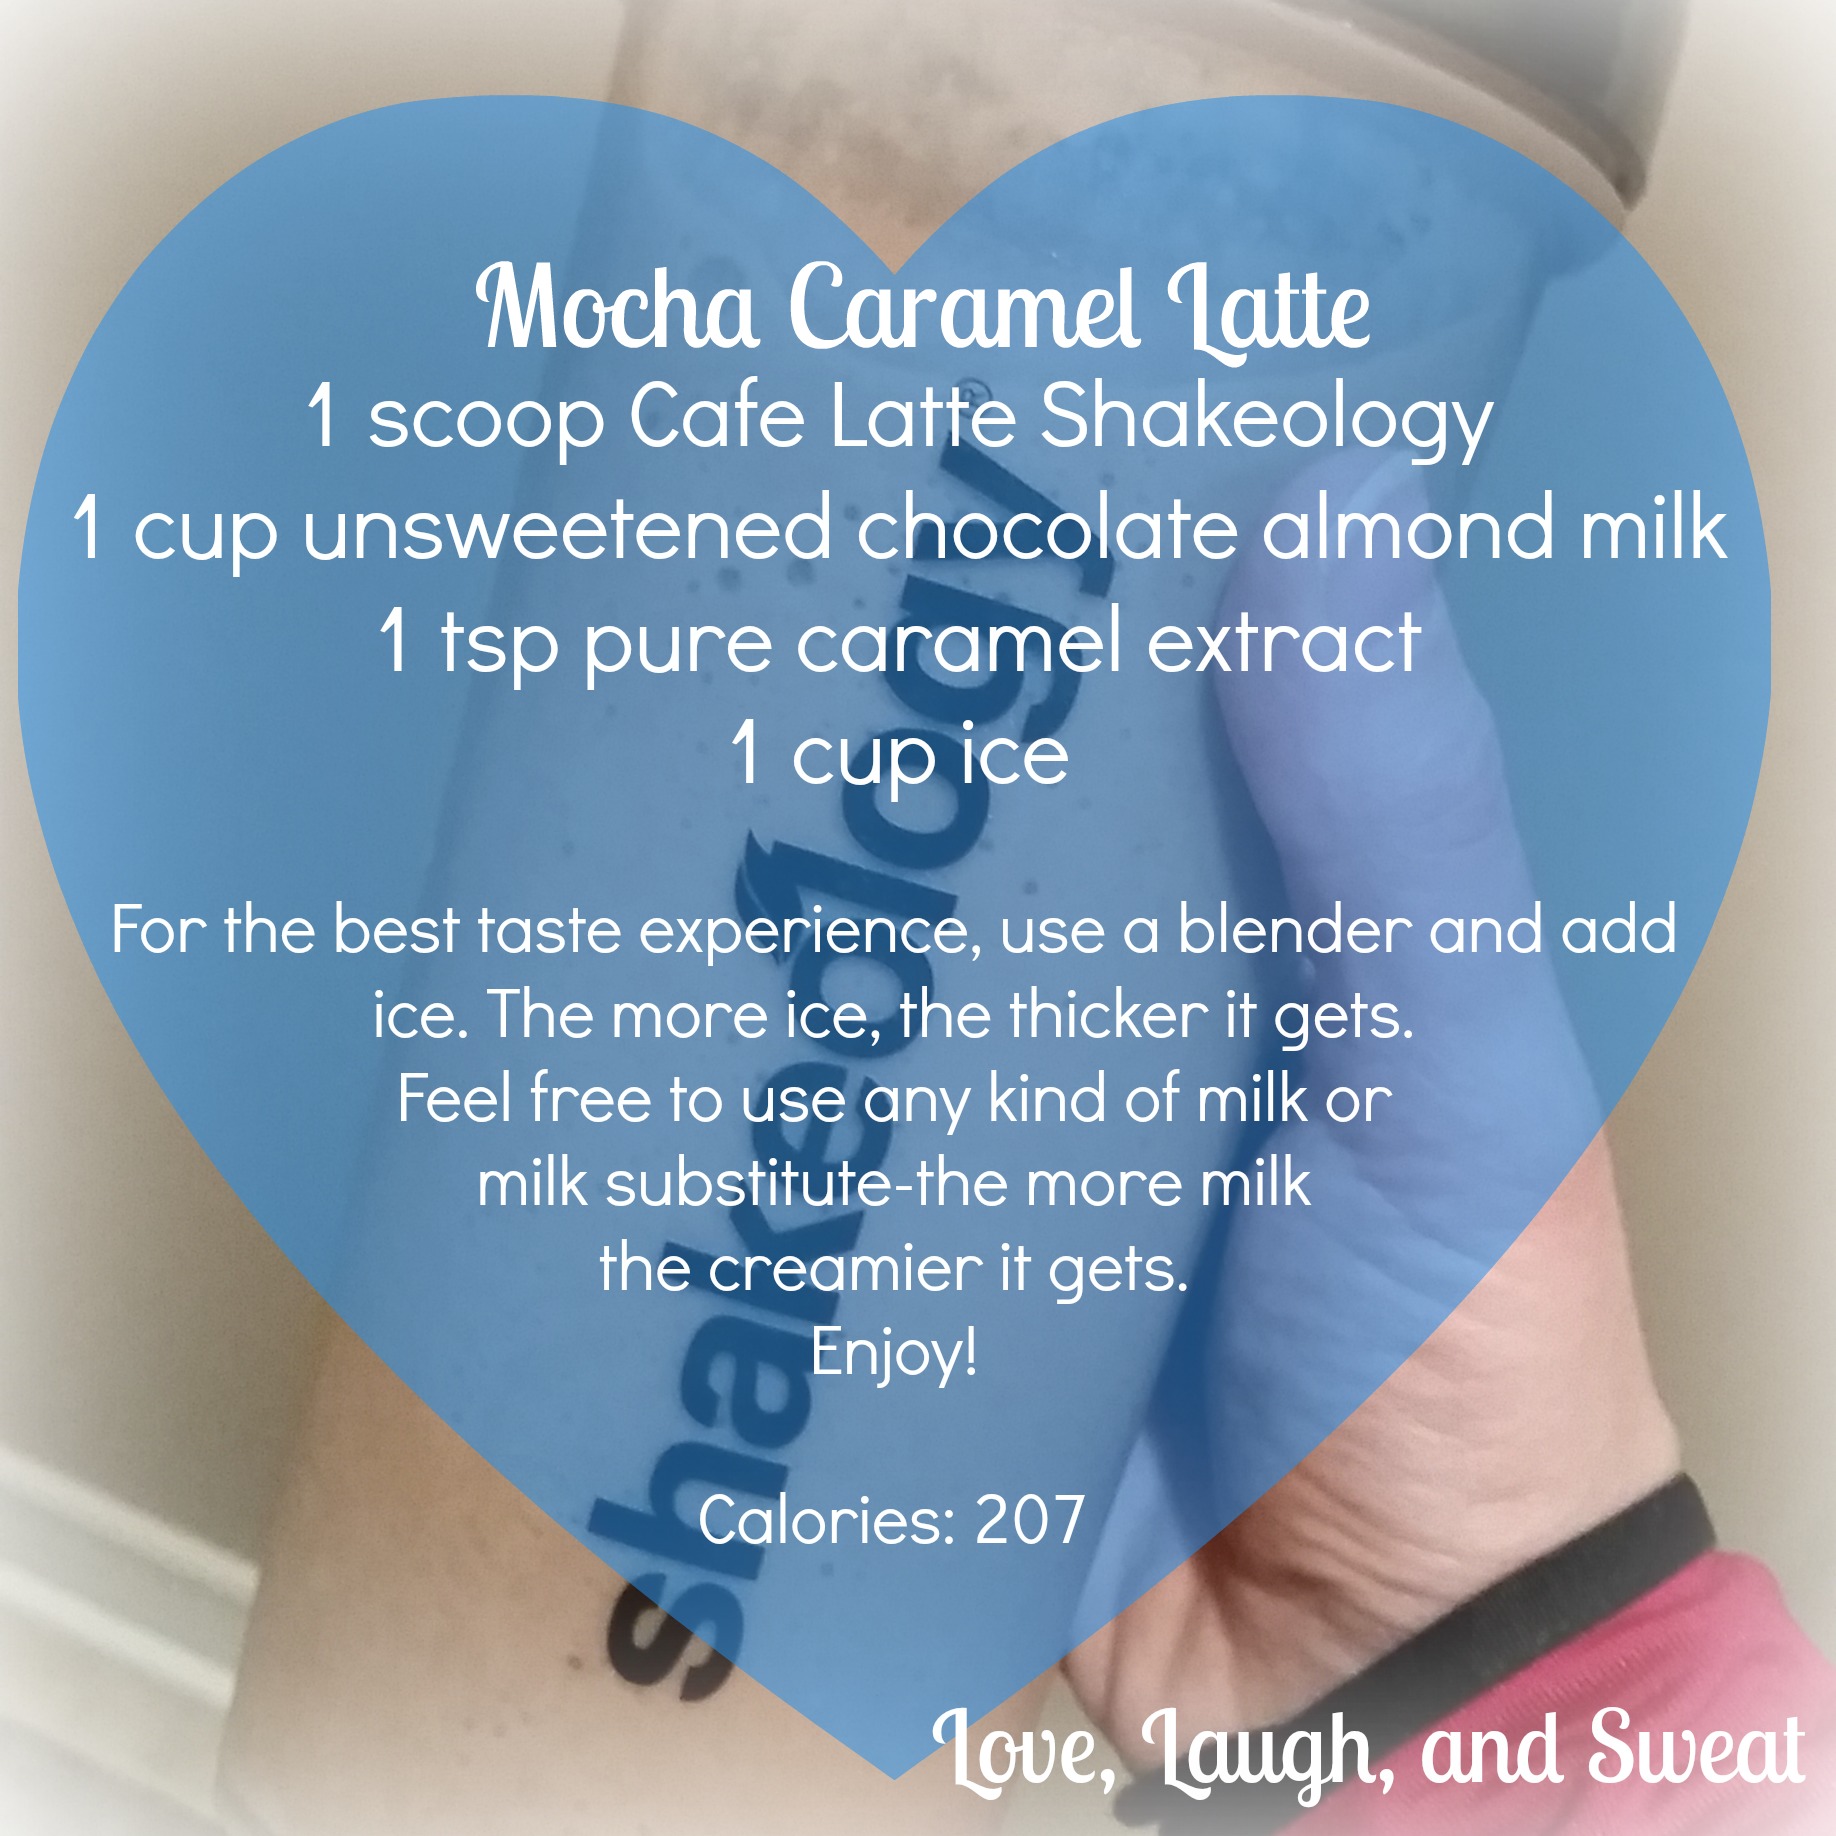 Mocha Caramel Latte Shakeology